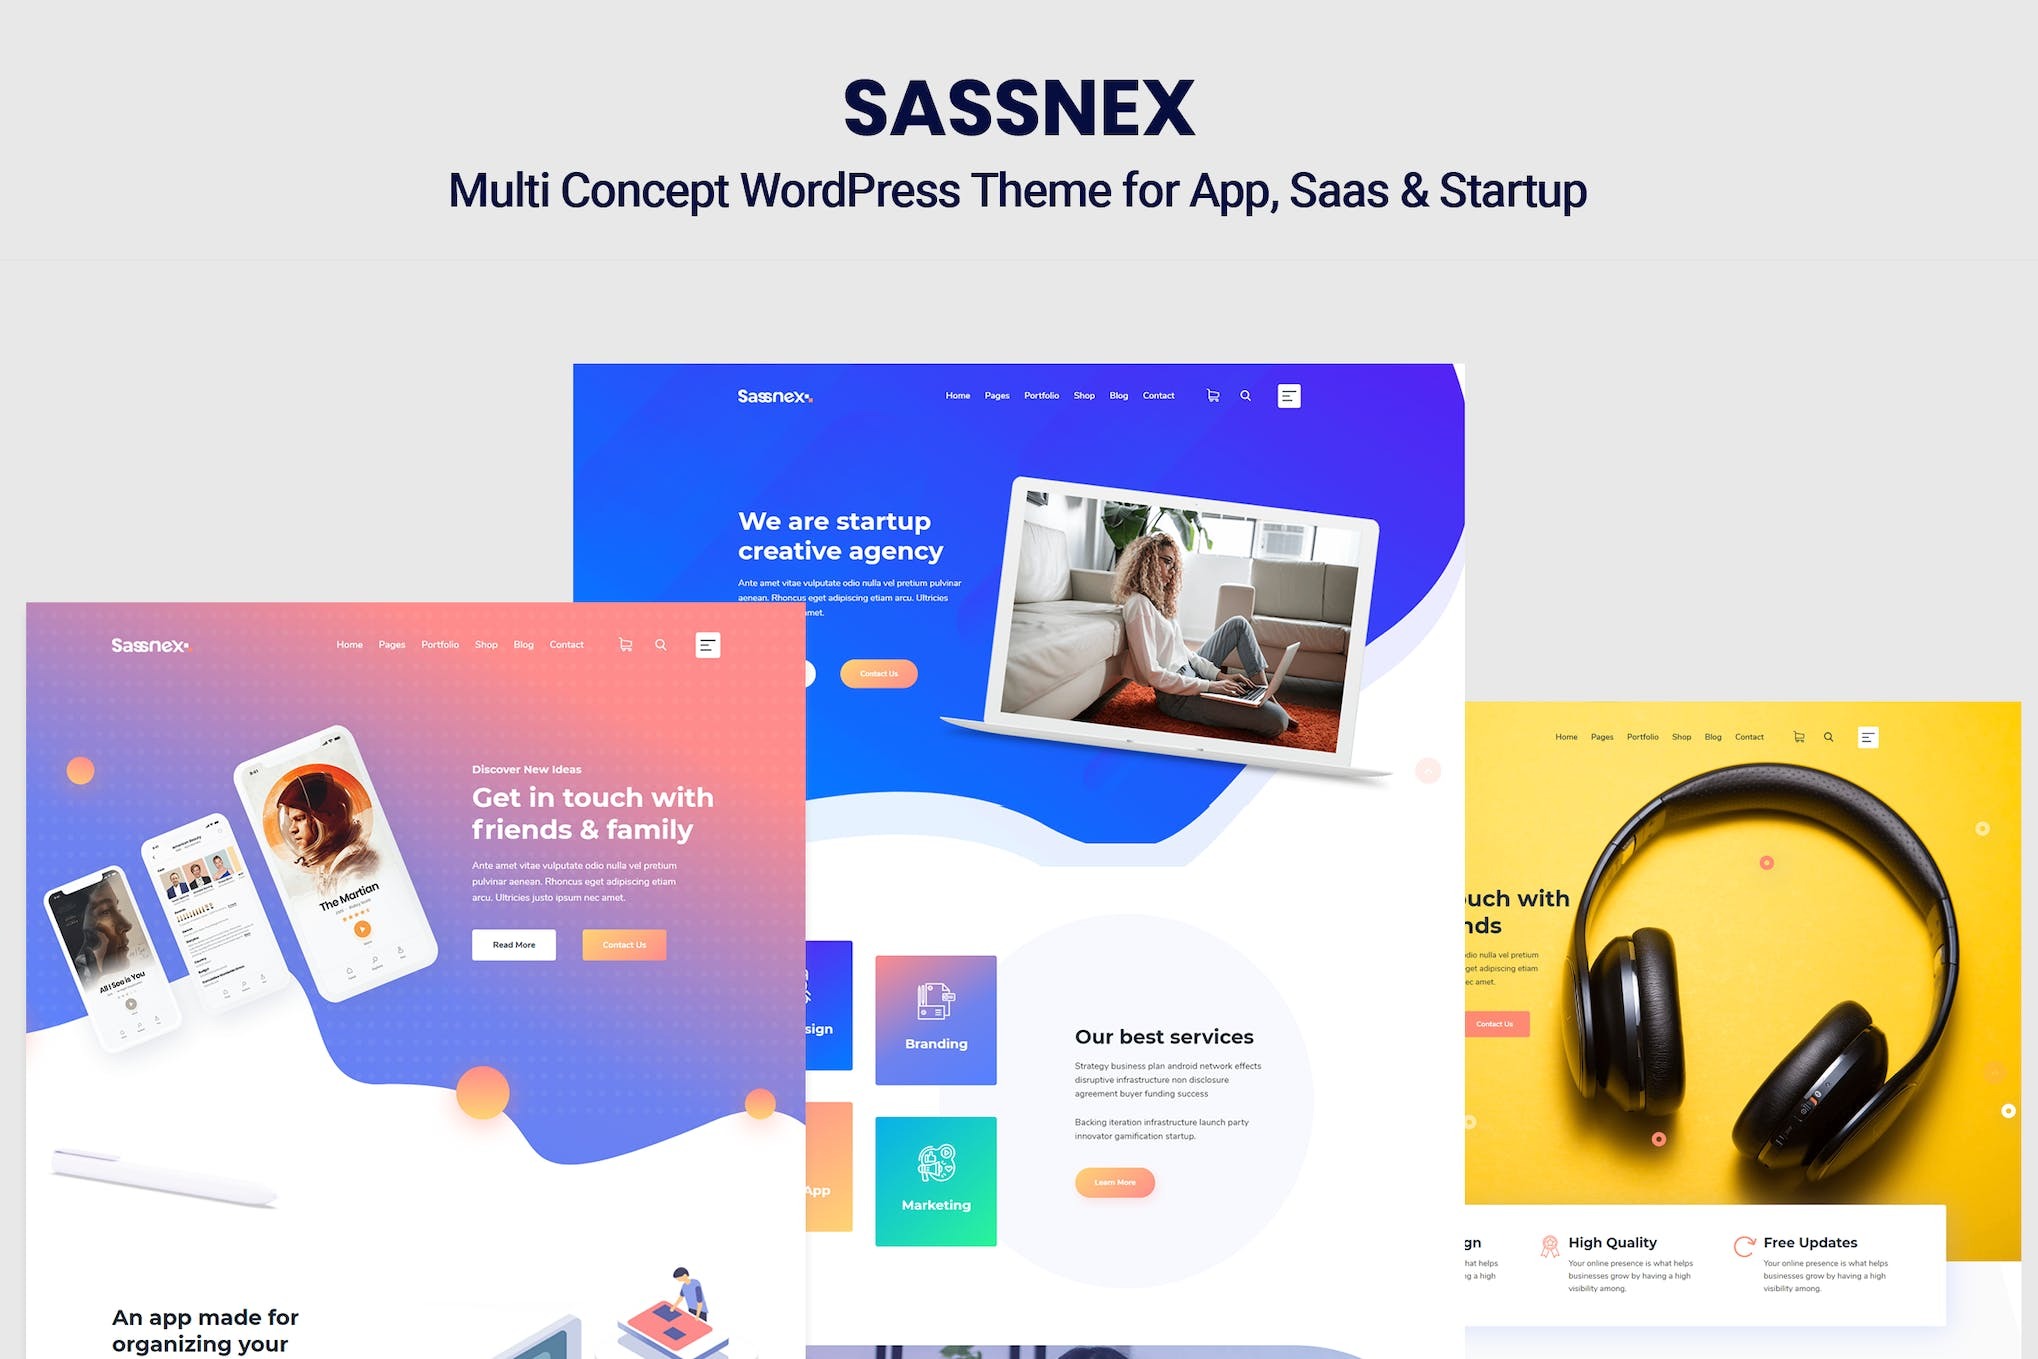 Sassnex - Multi-concept WordPress Theme for App